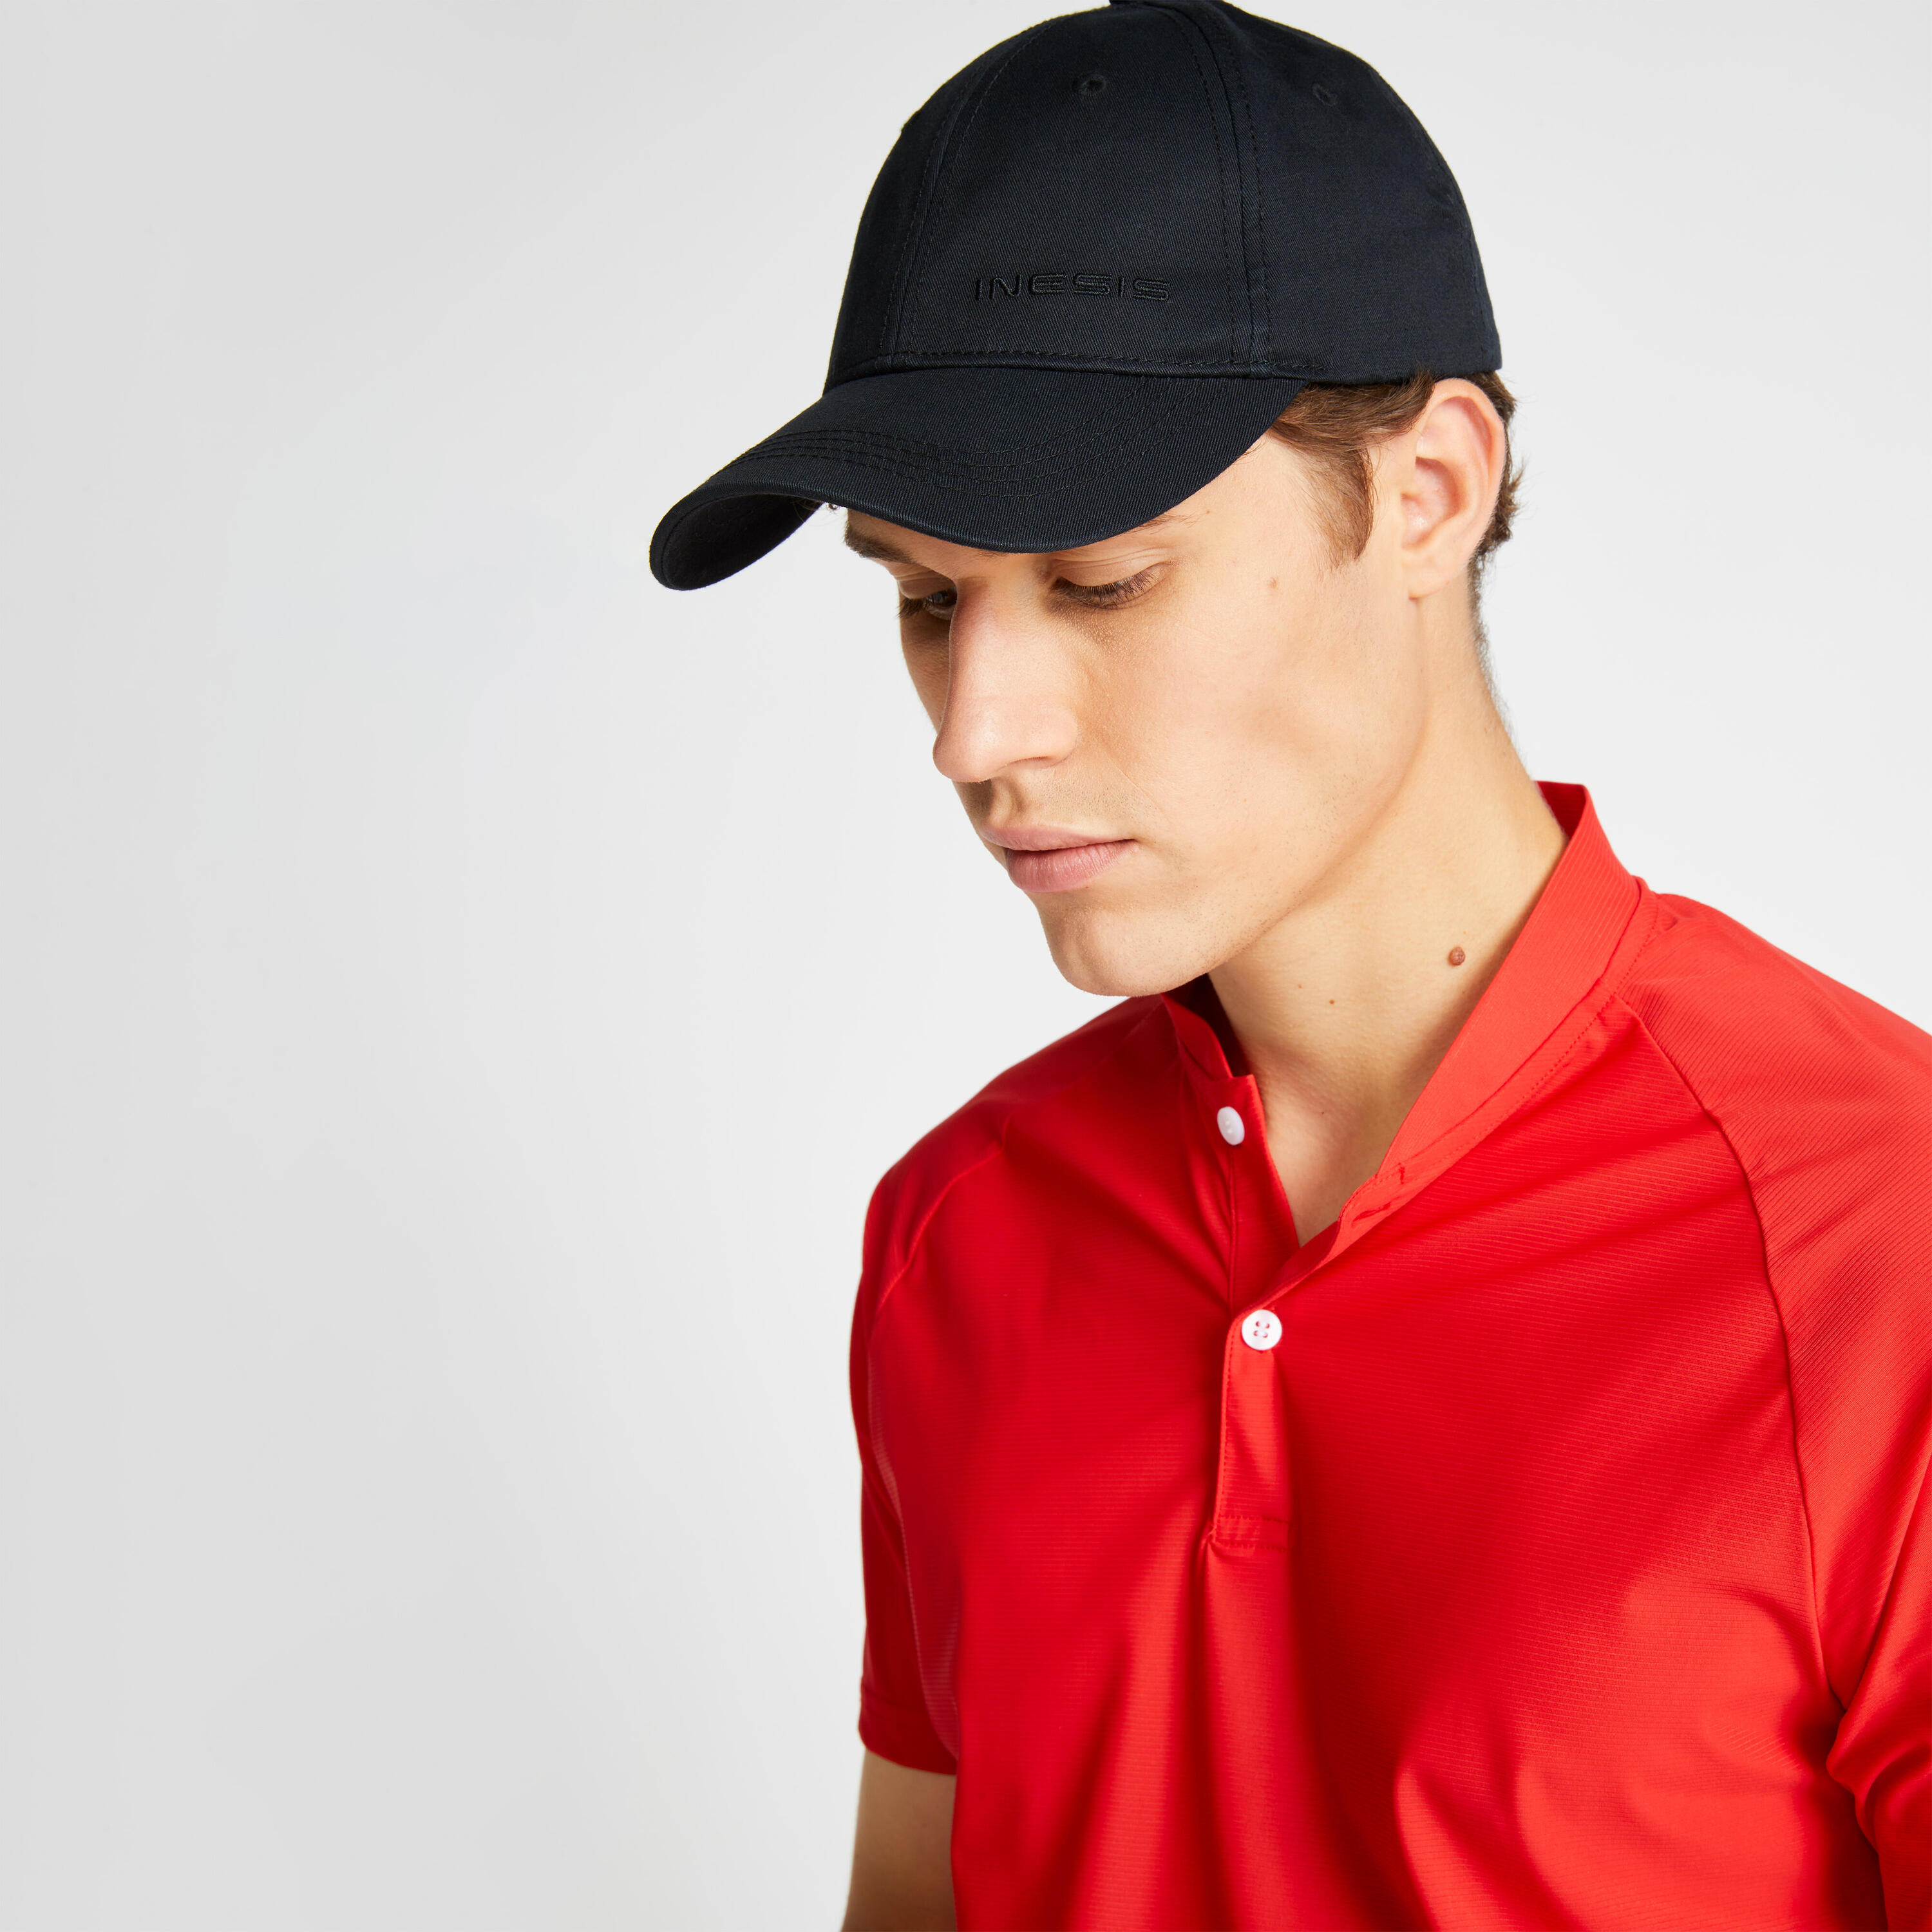 Men's short-sleeved golf polo shirt - WW900 red 4/4